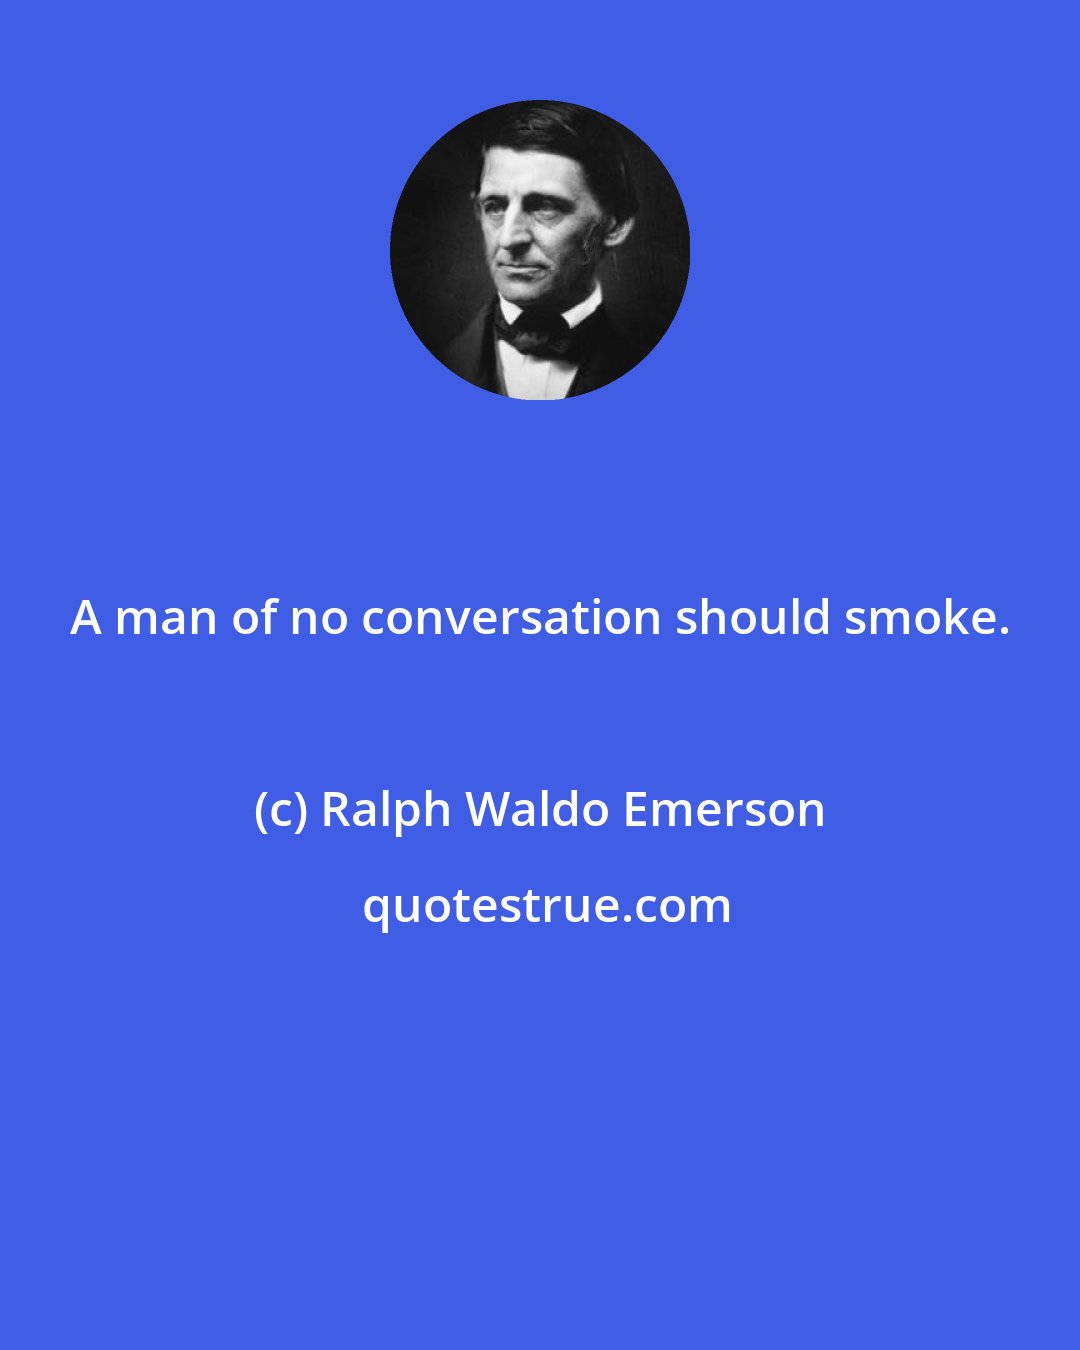 Ralph Waldo Emerson: A man of no conversation should smoke.